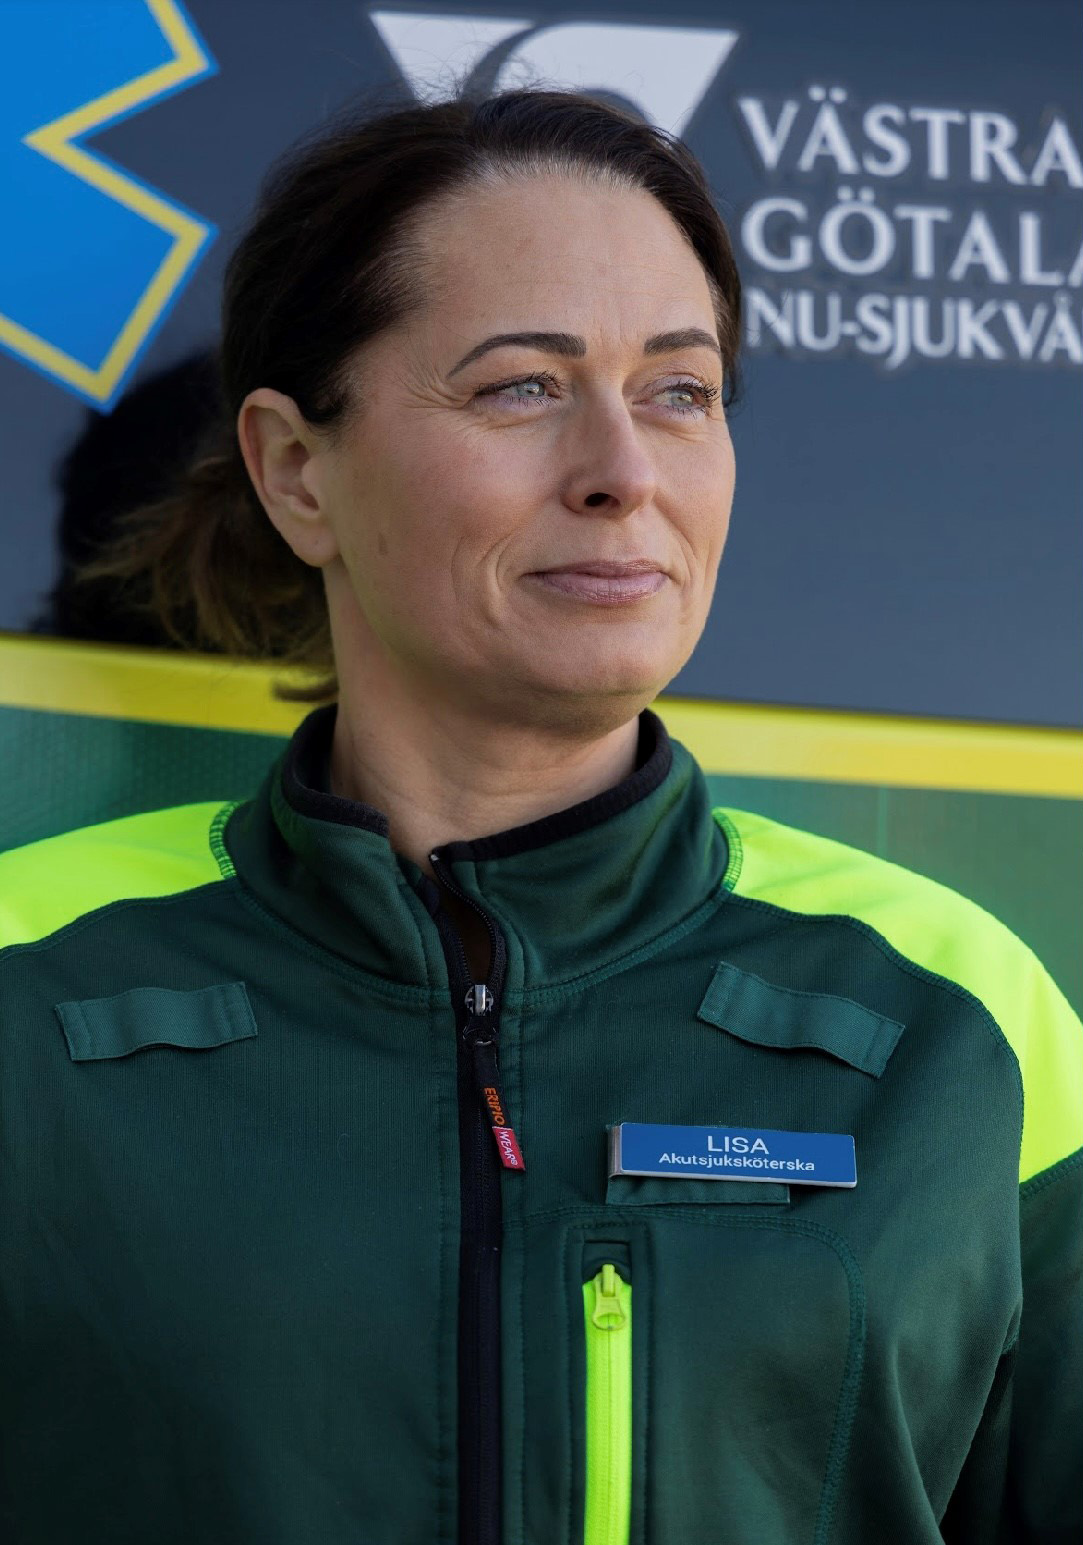 Lisa Bertilsson i ambulanskläder